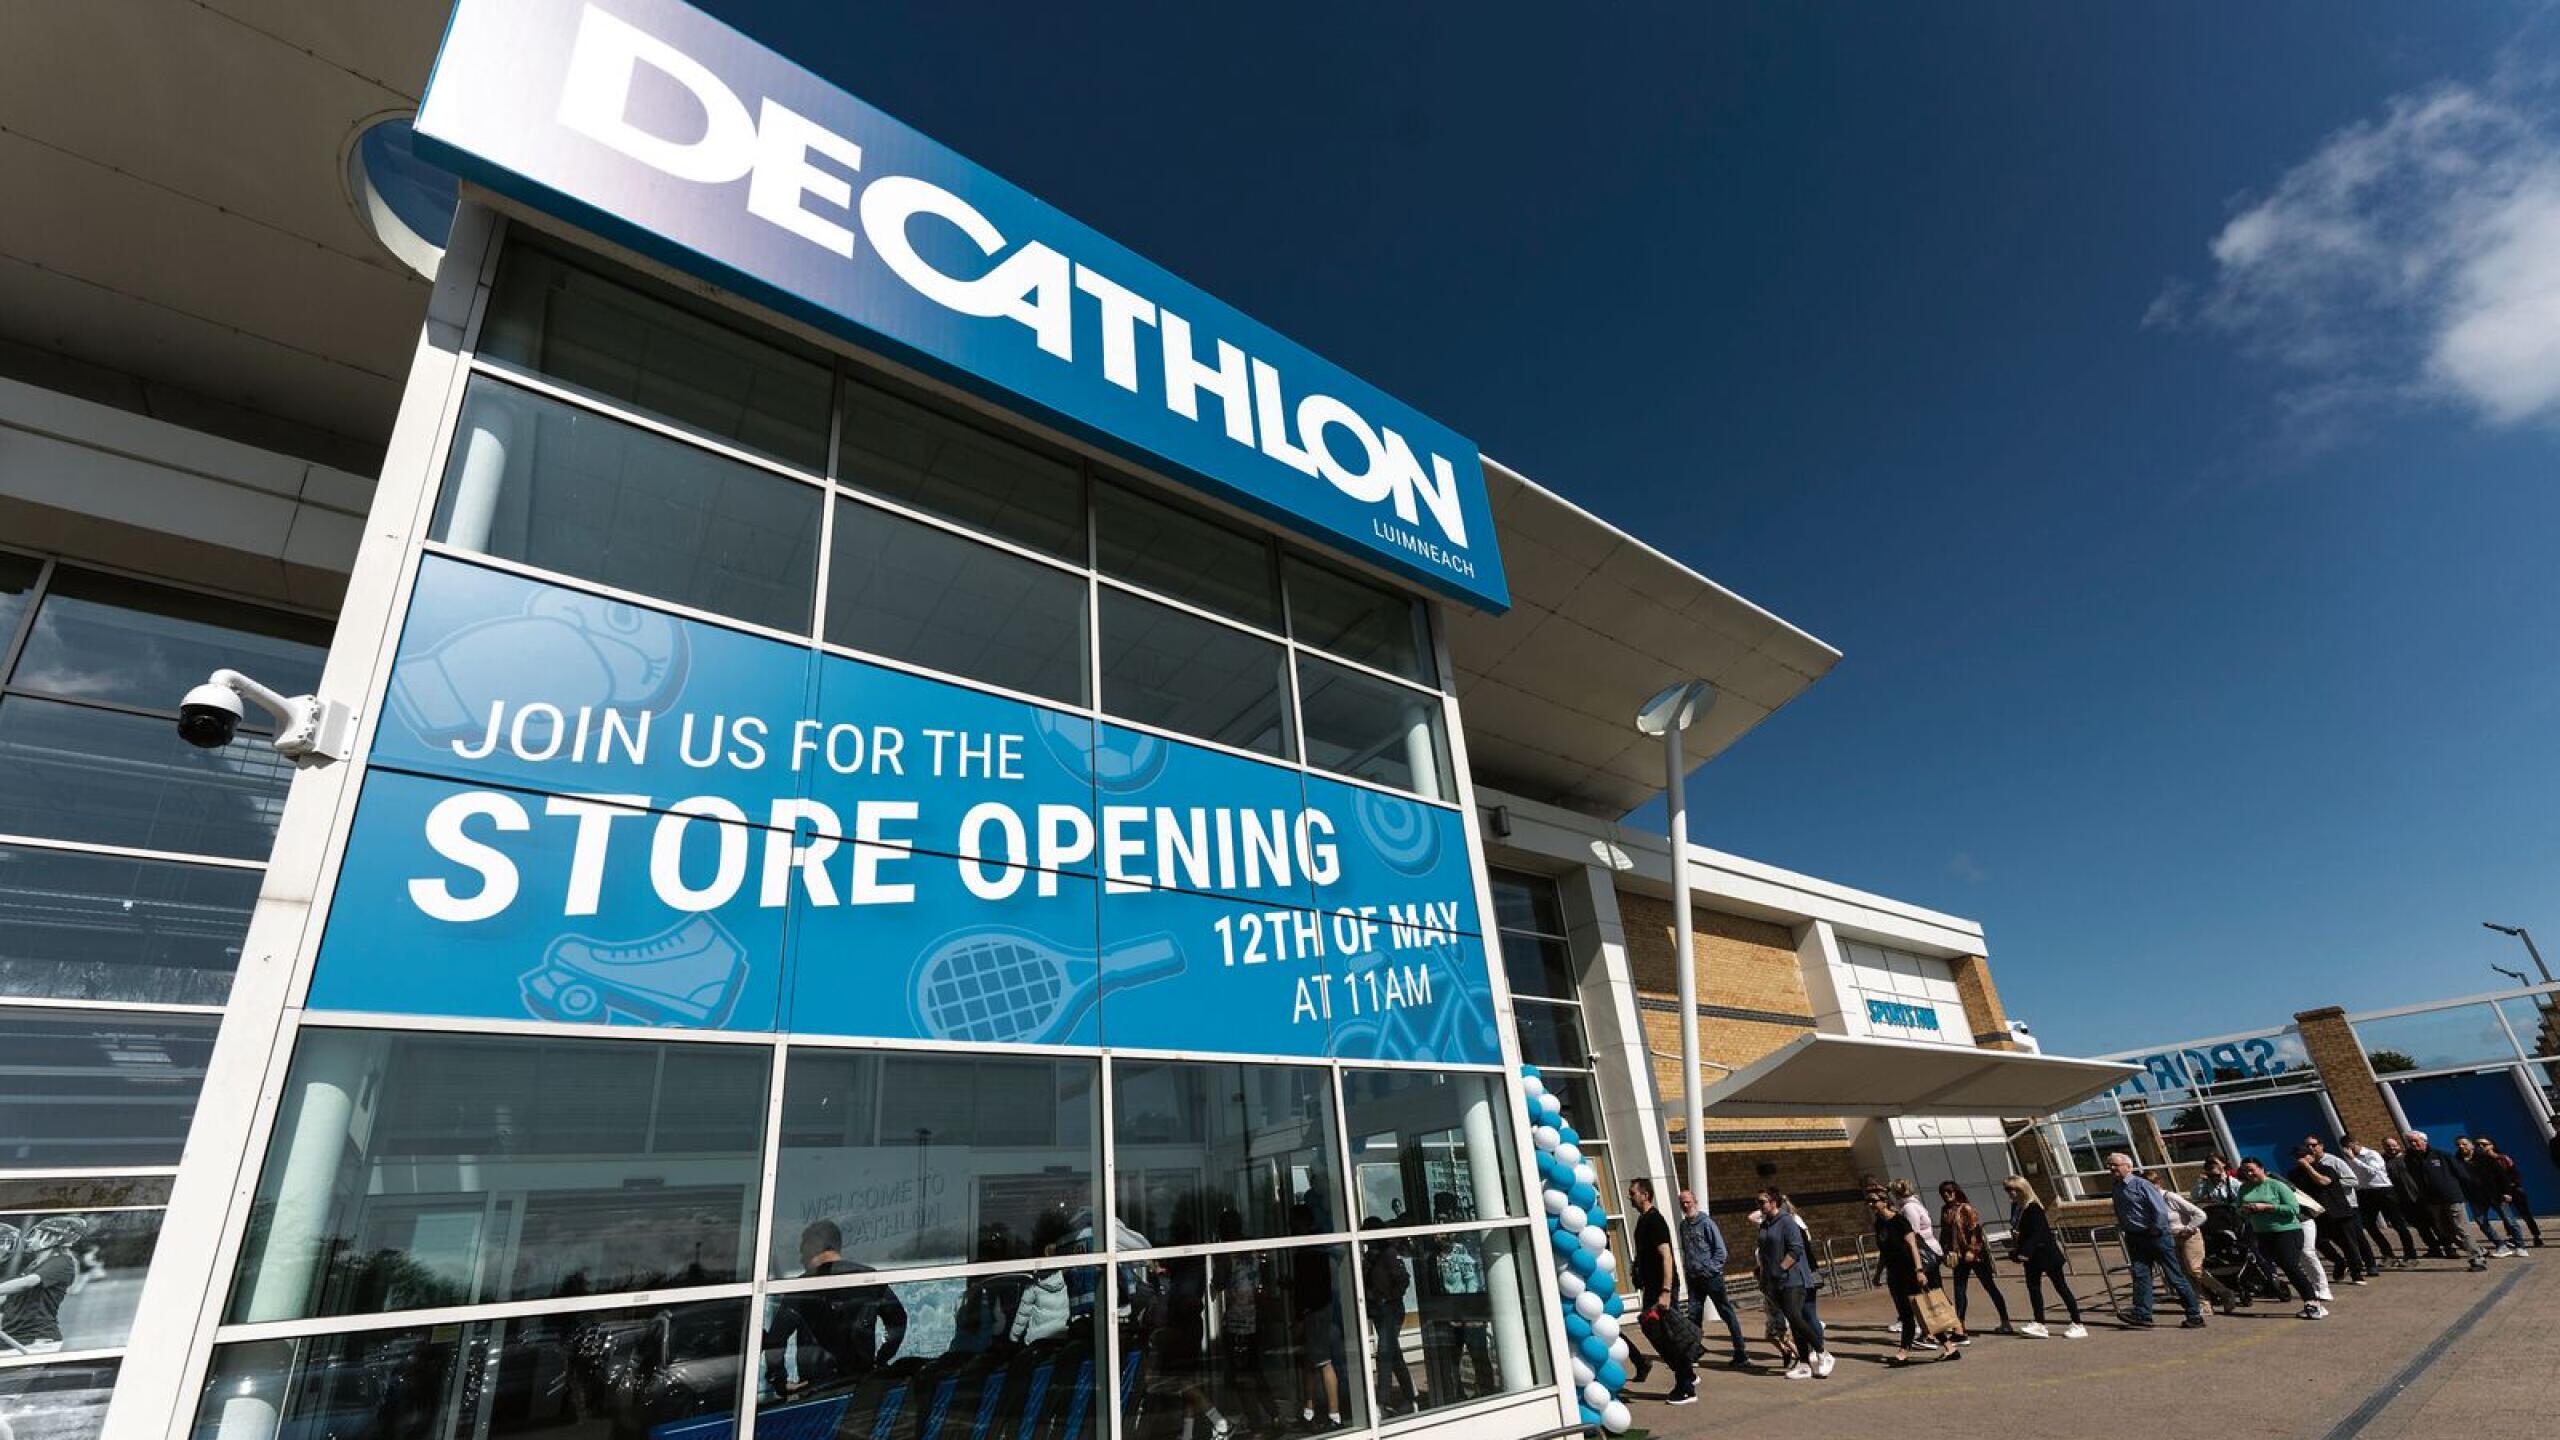 Decathlon reports nearly €7.5bn in sales through its Irish unit